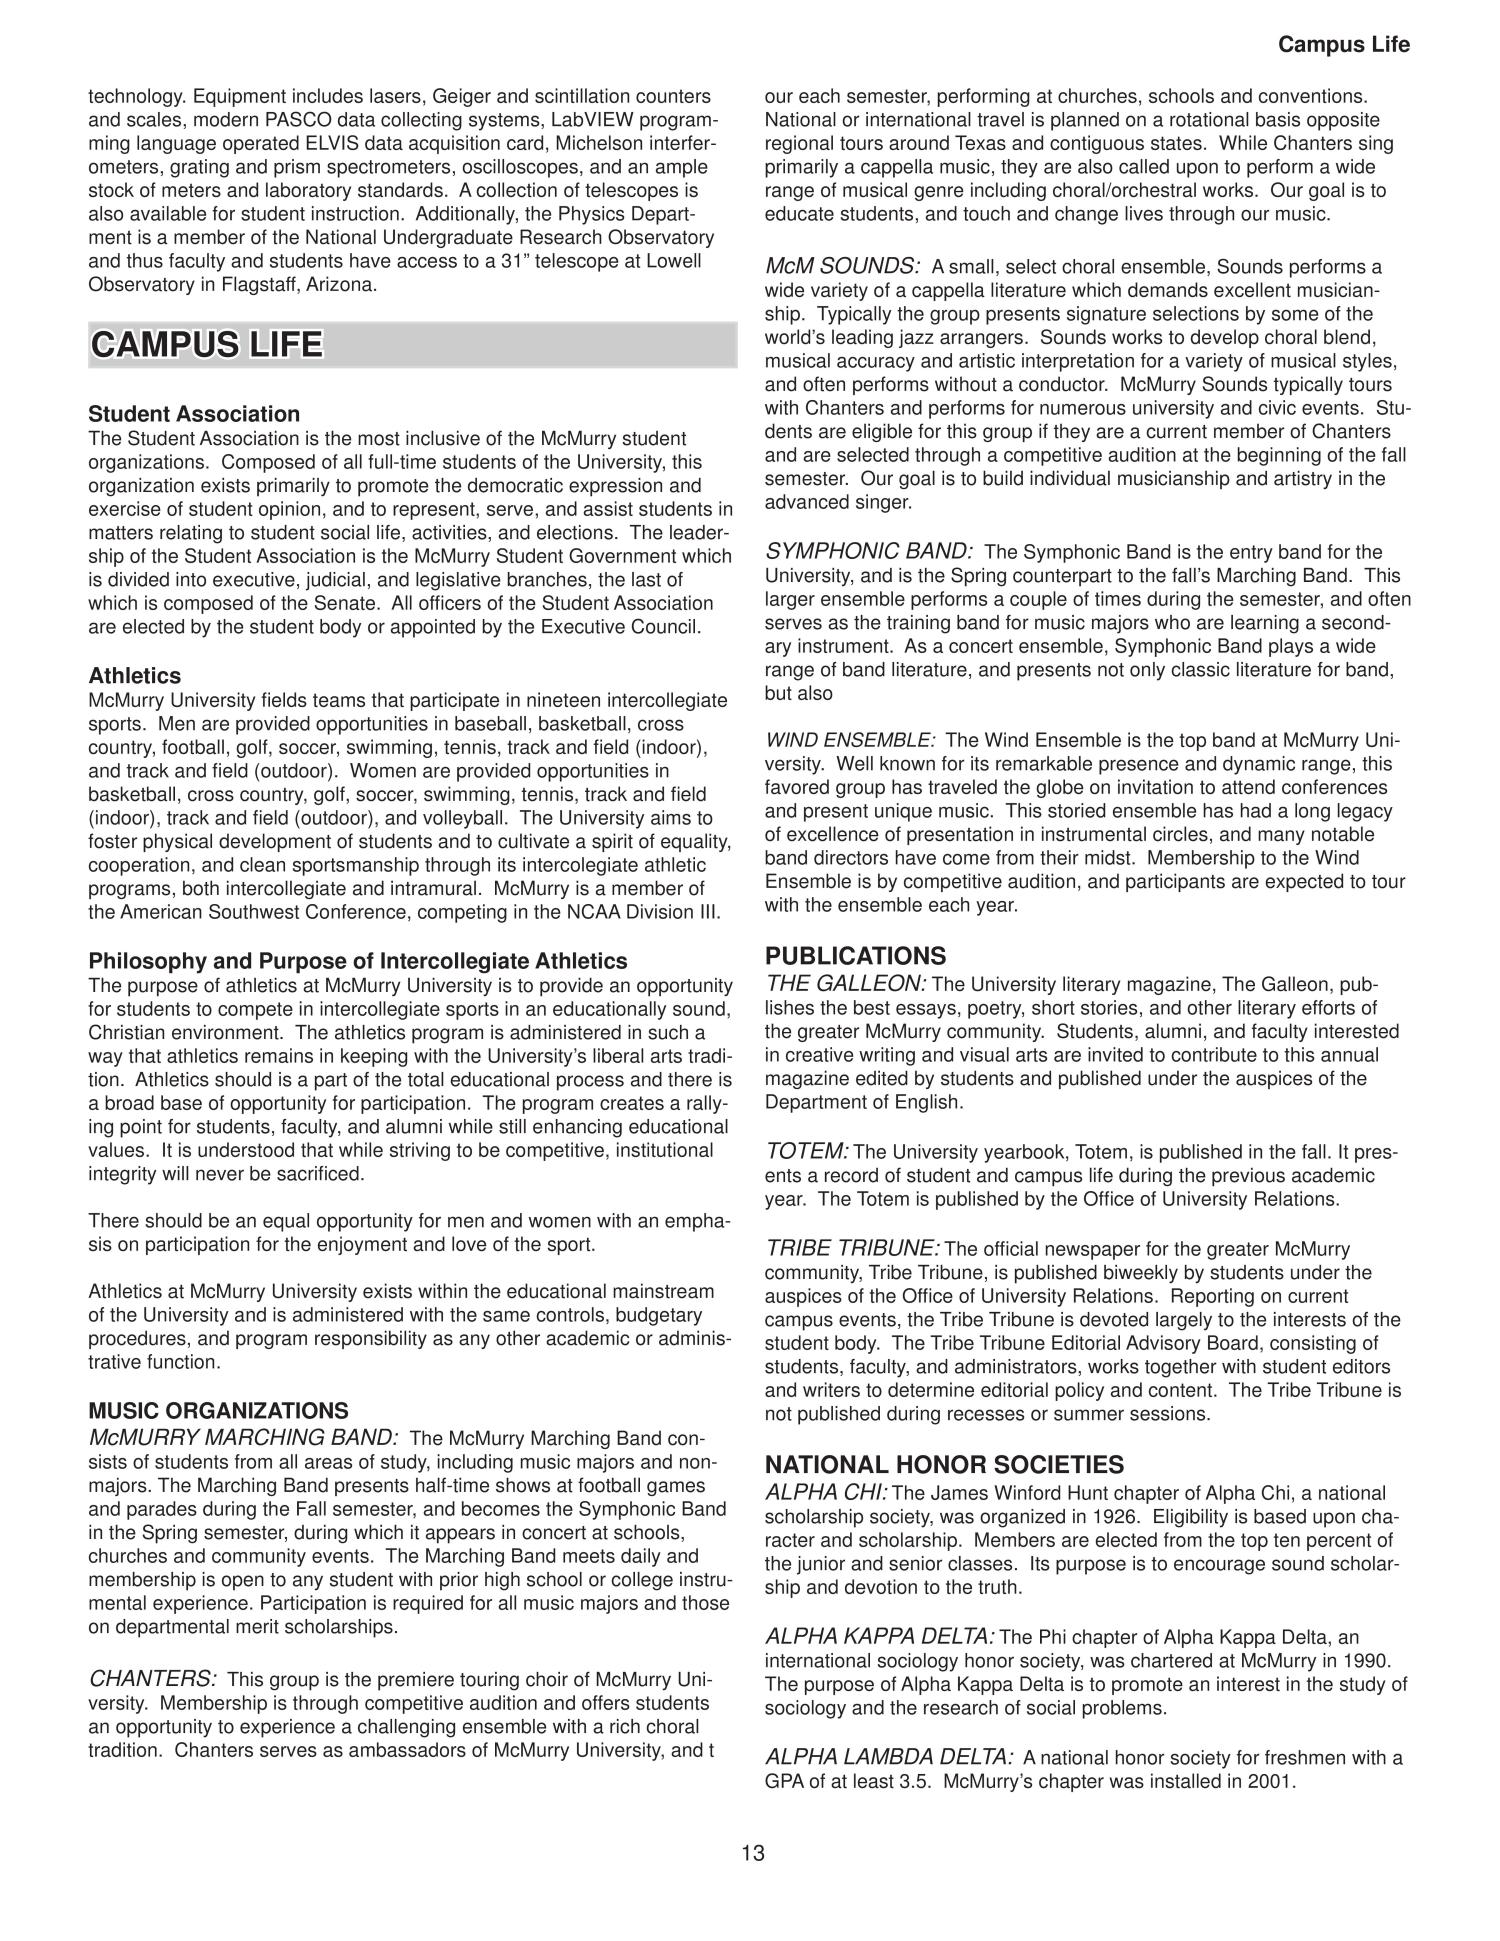 Bulletin of McMurry University, 2011-2012
                                                
                                                    13
                                                